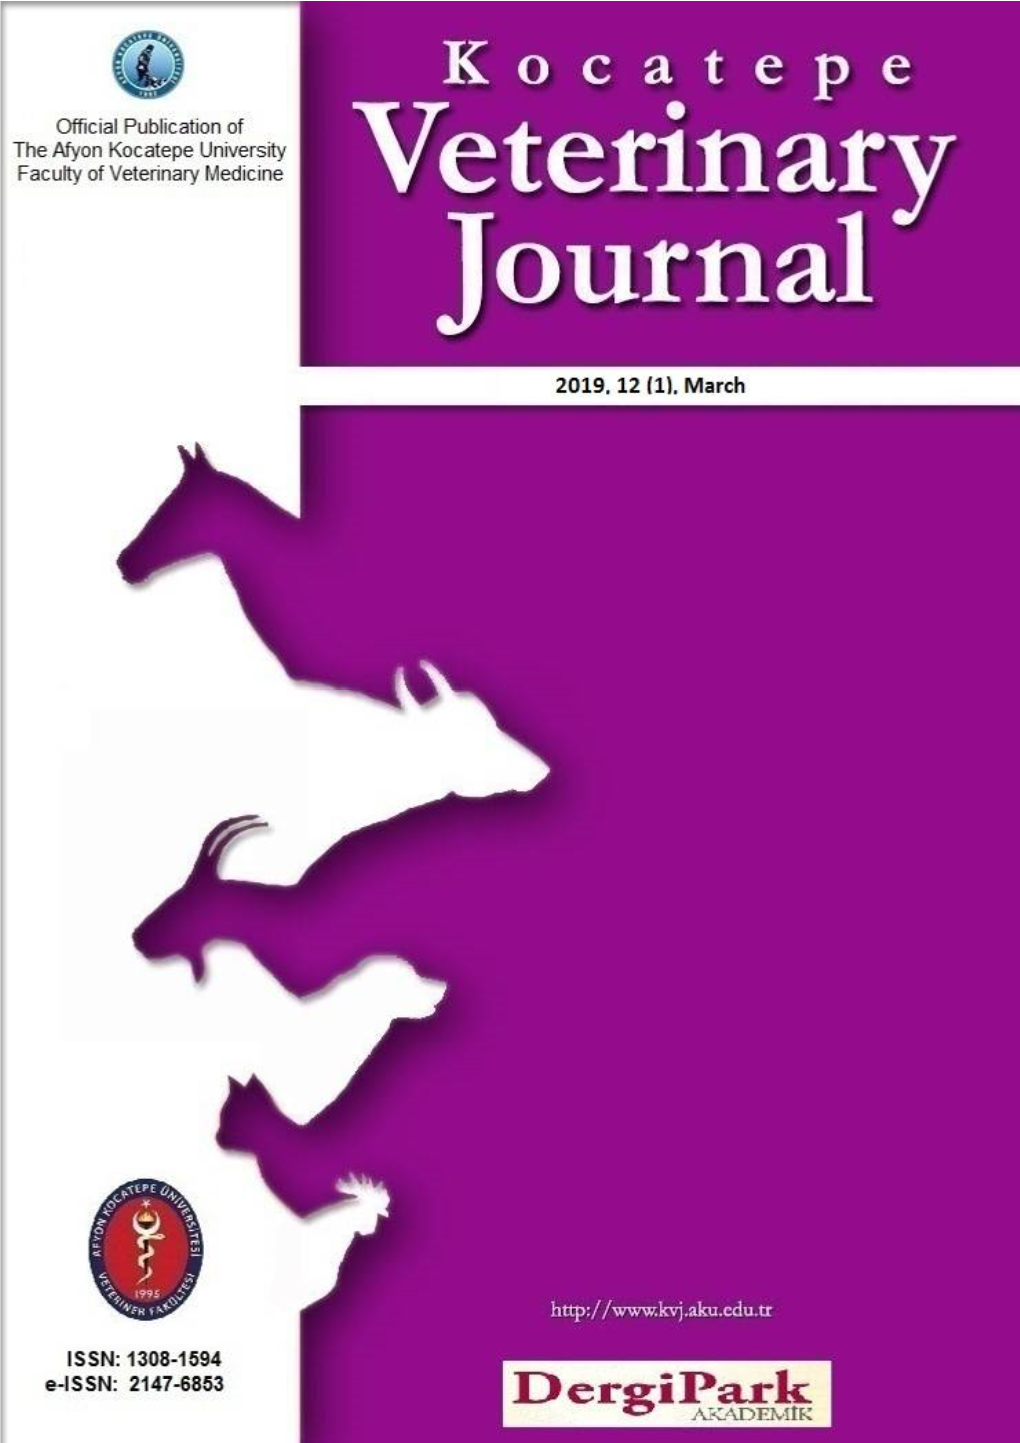 Kocatepe Veterinary Journal 2019 March 12